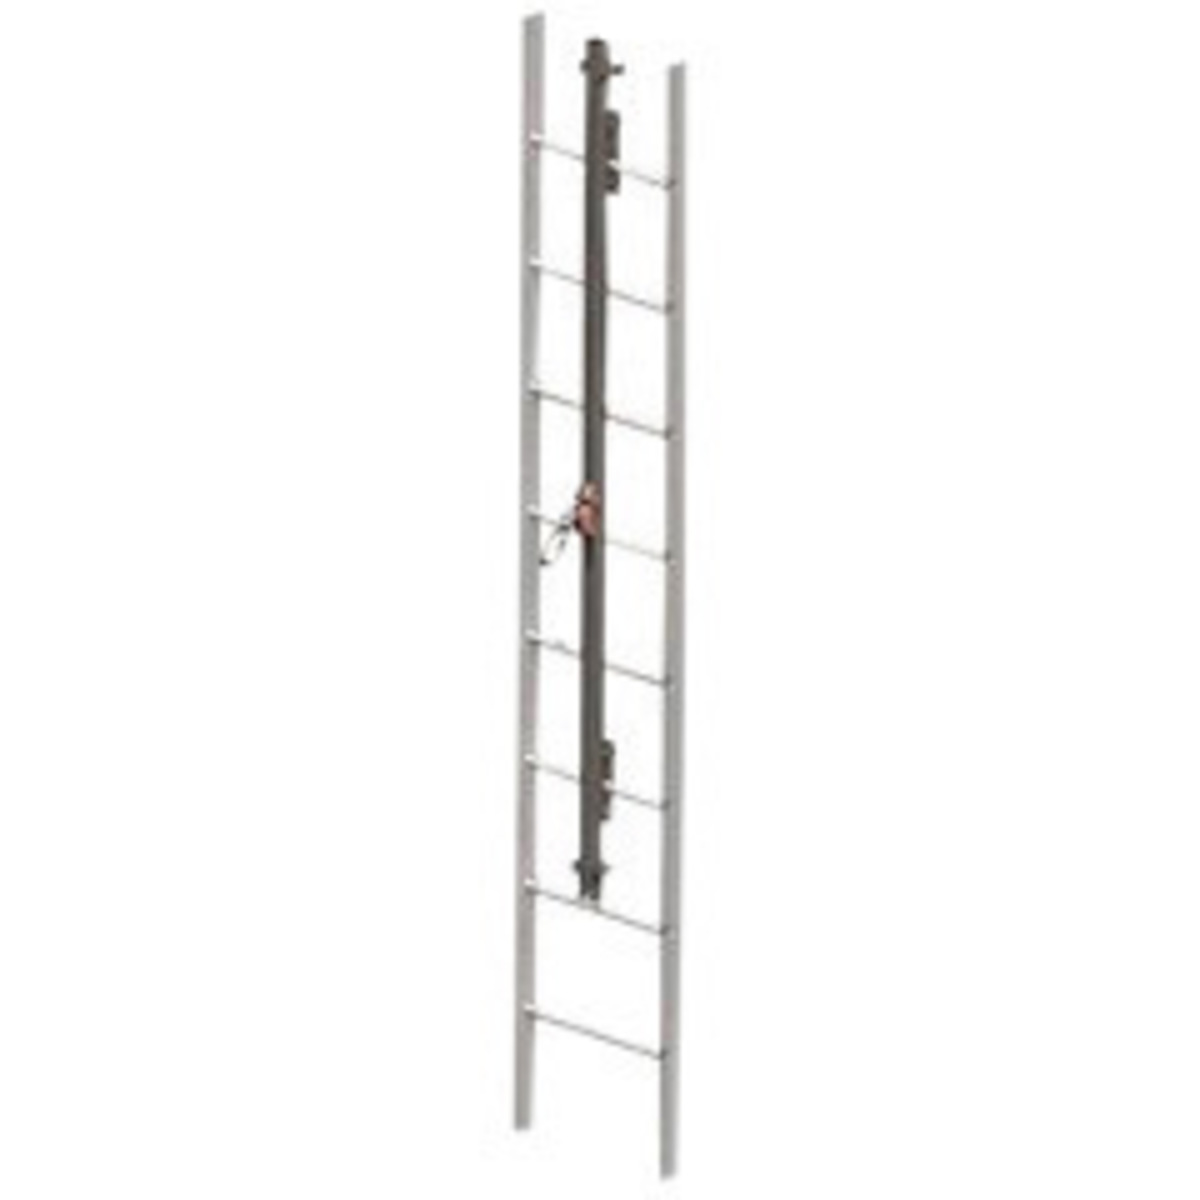 Honeywell Miller® GlideLoc® Fixed 40' Vertical Height Access Ladder System Kit